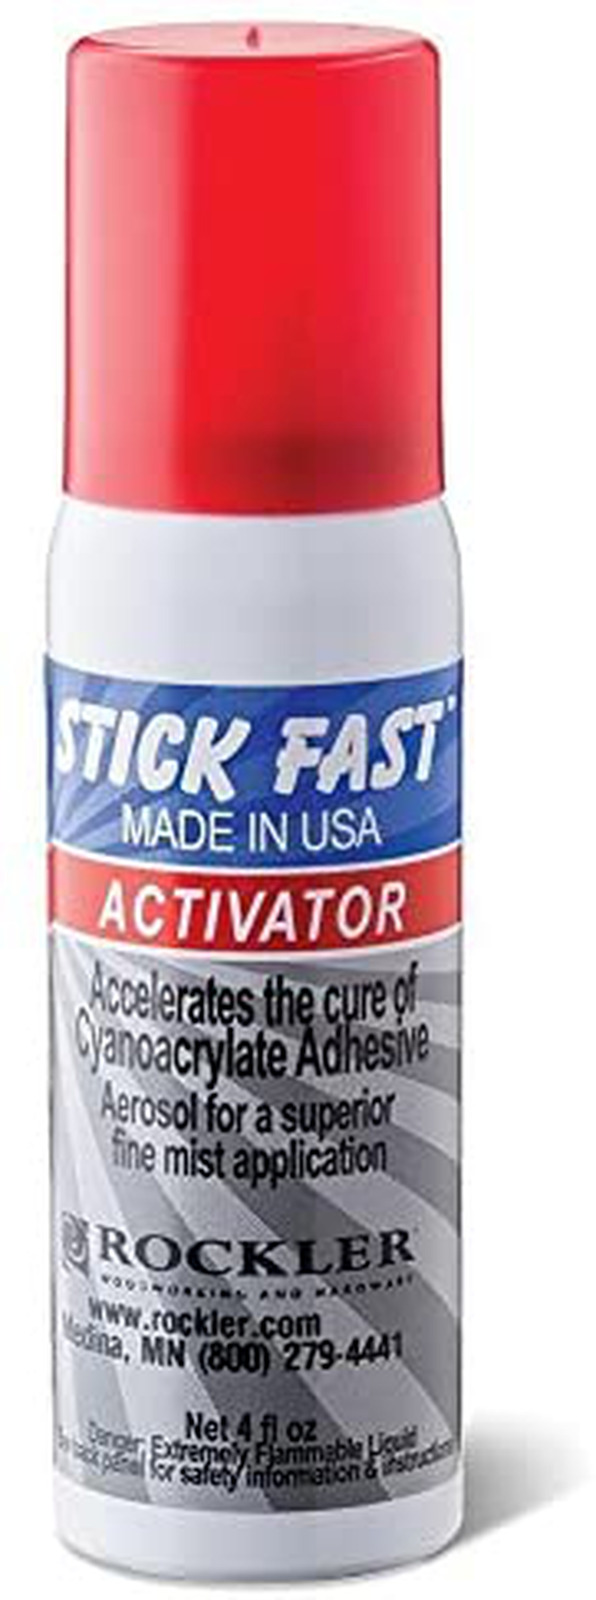 Stick Fast Aerosol Activator Multipurpose Adhesive Spray, Clear, 4 Ounces